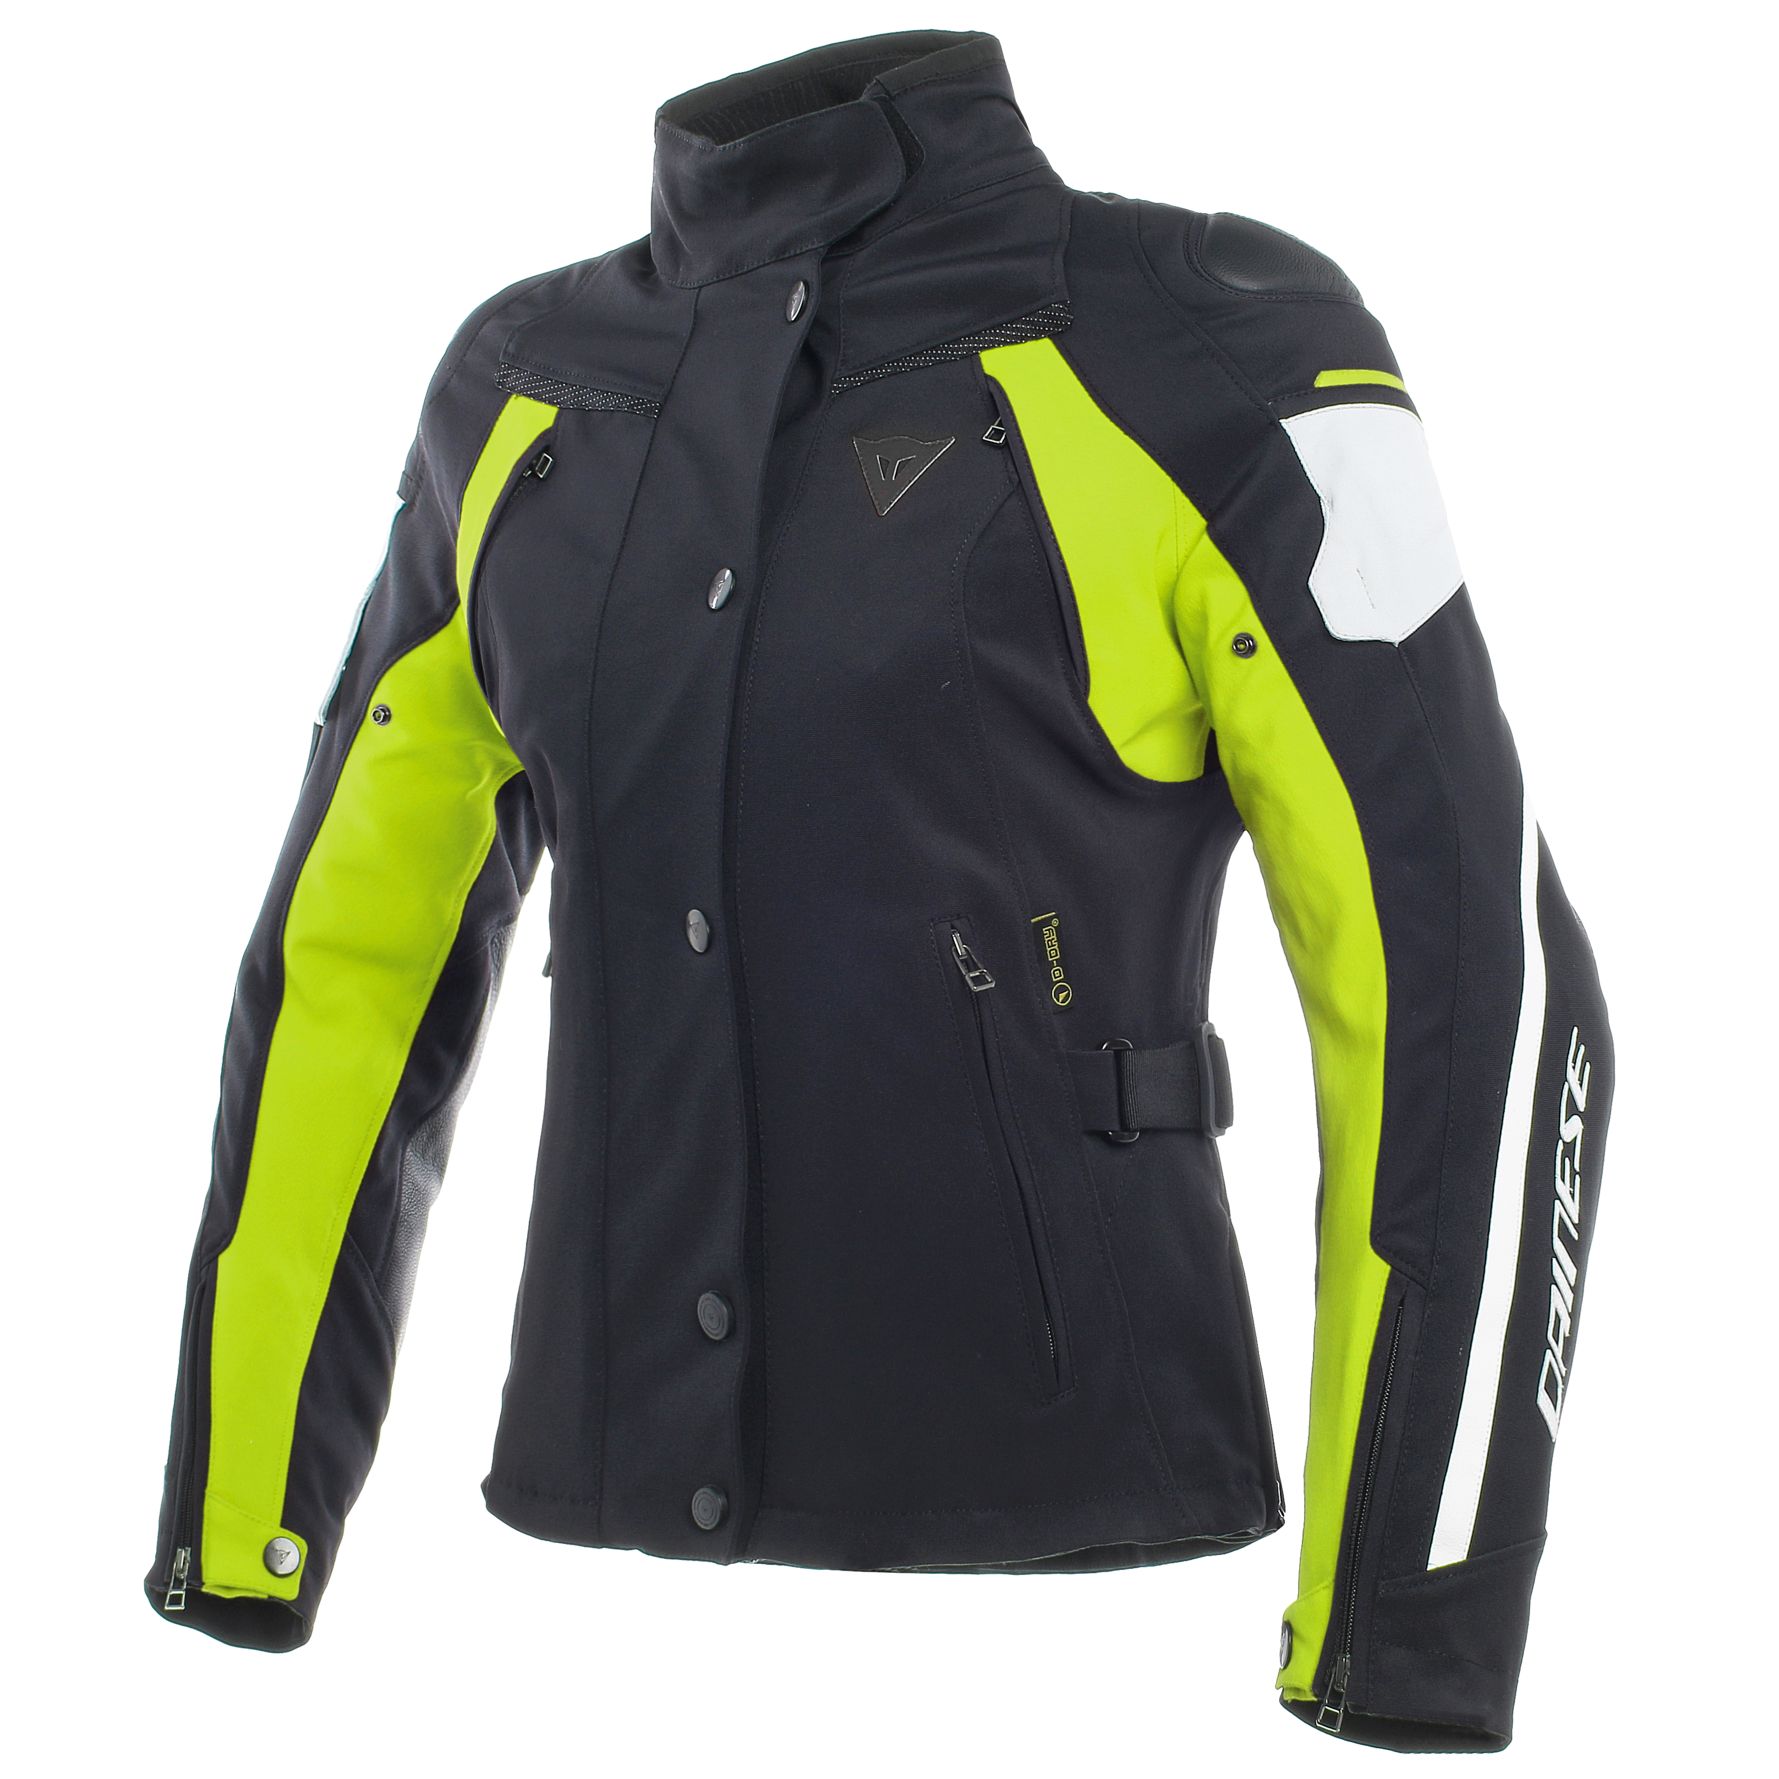 Куртка Dainese Air Master Lady Tex Jacket Black/Glacier-Gray/Fluo. Dainese Axial Yellow Fluo. Leatt 4.0 Hydradry куртка. Куртка Dainese Indomita d-Dry XT. Rain master